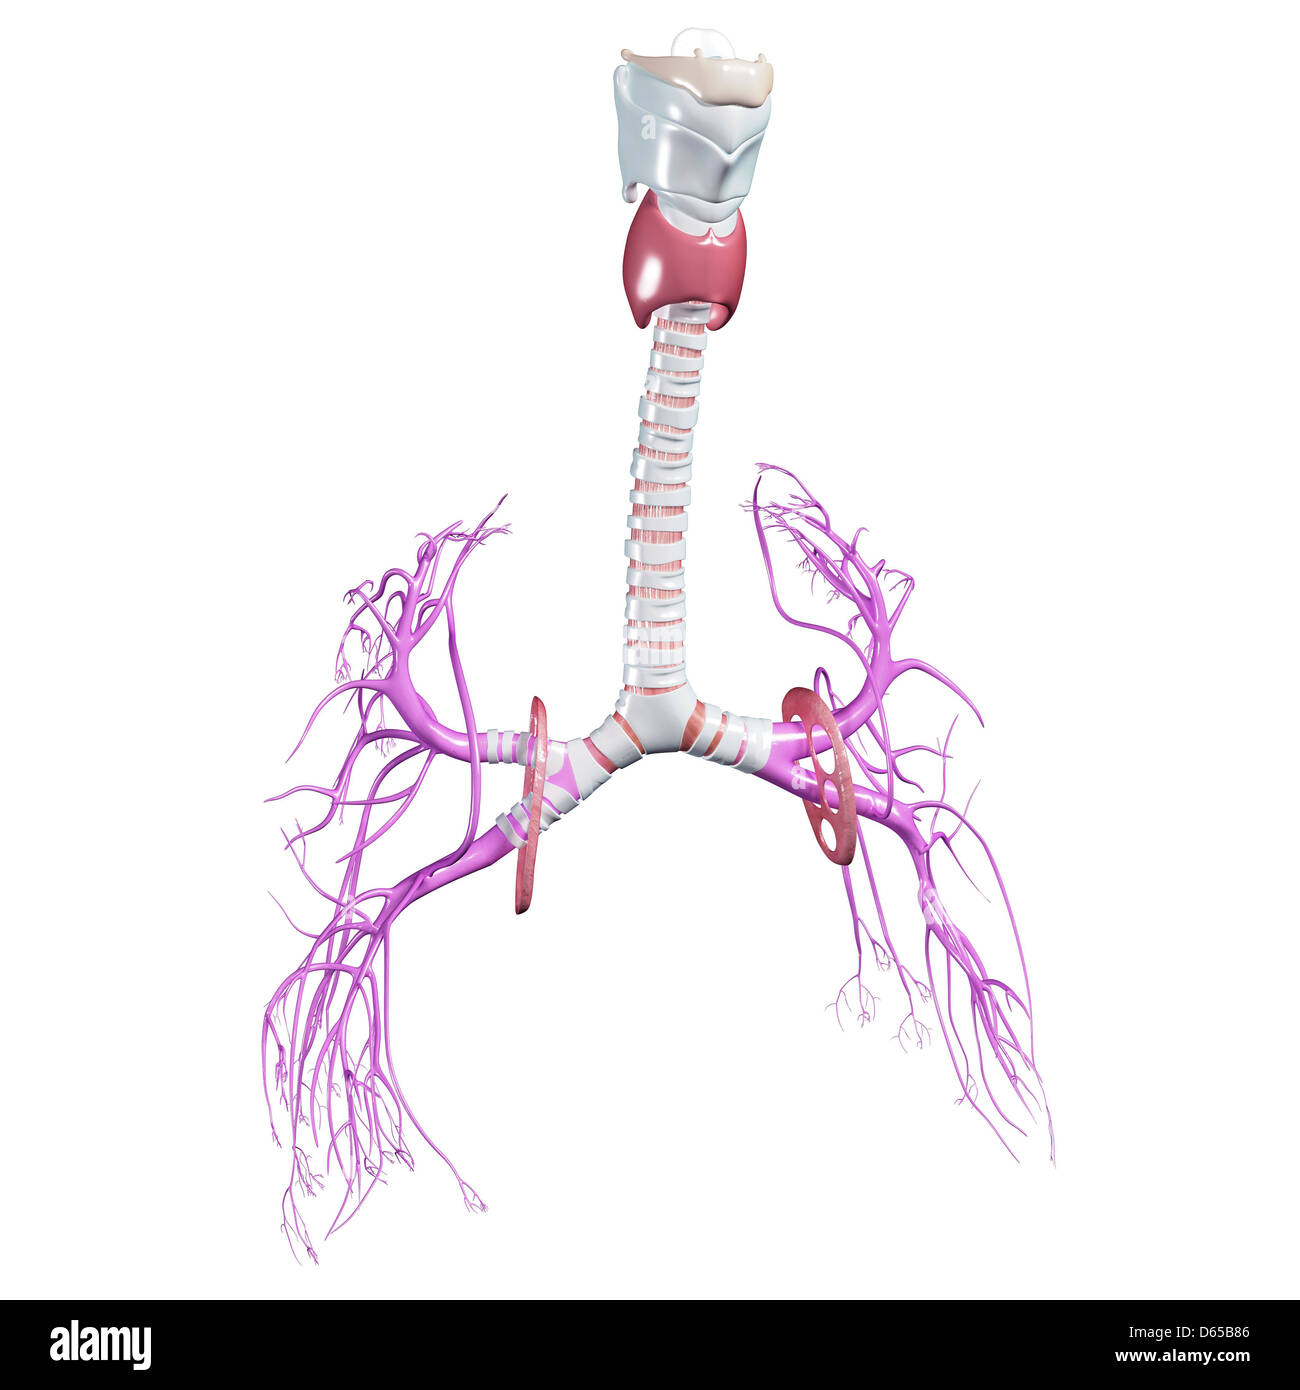 respiratory system, artwork Stock Photo